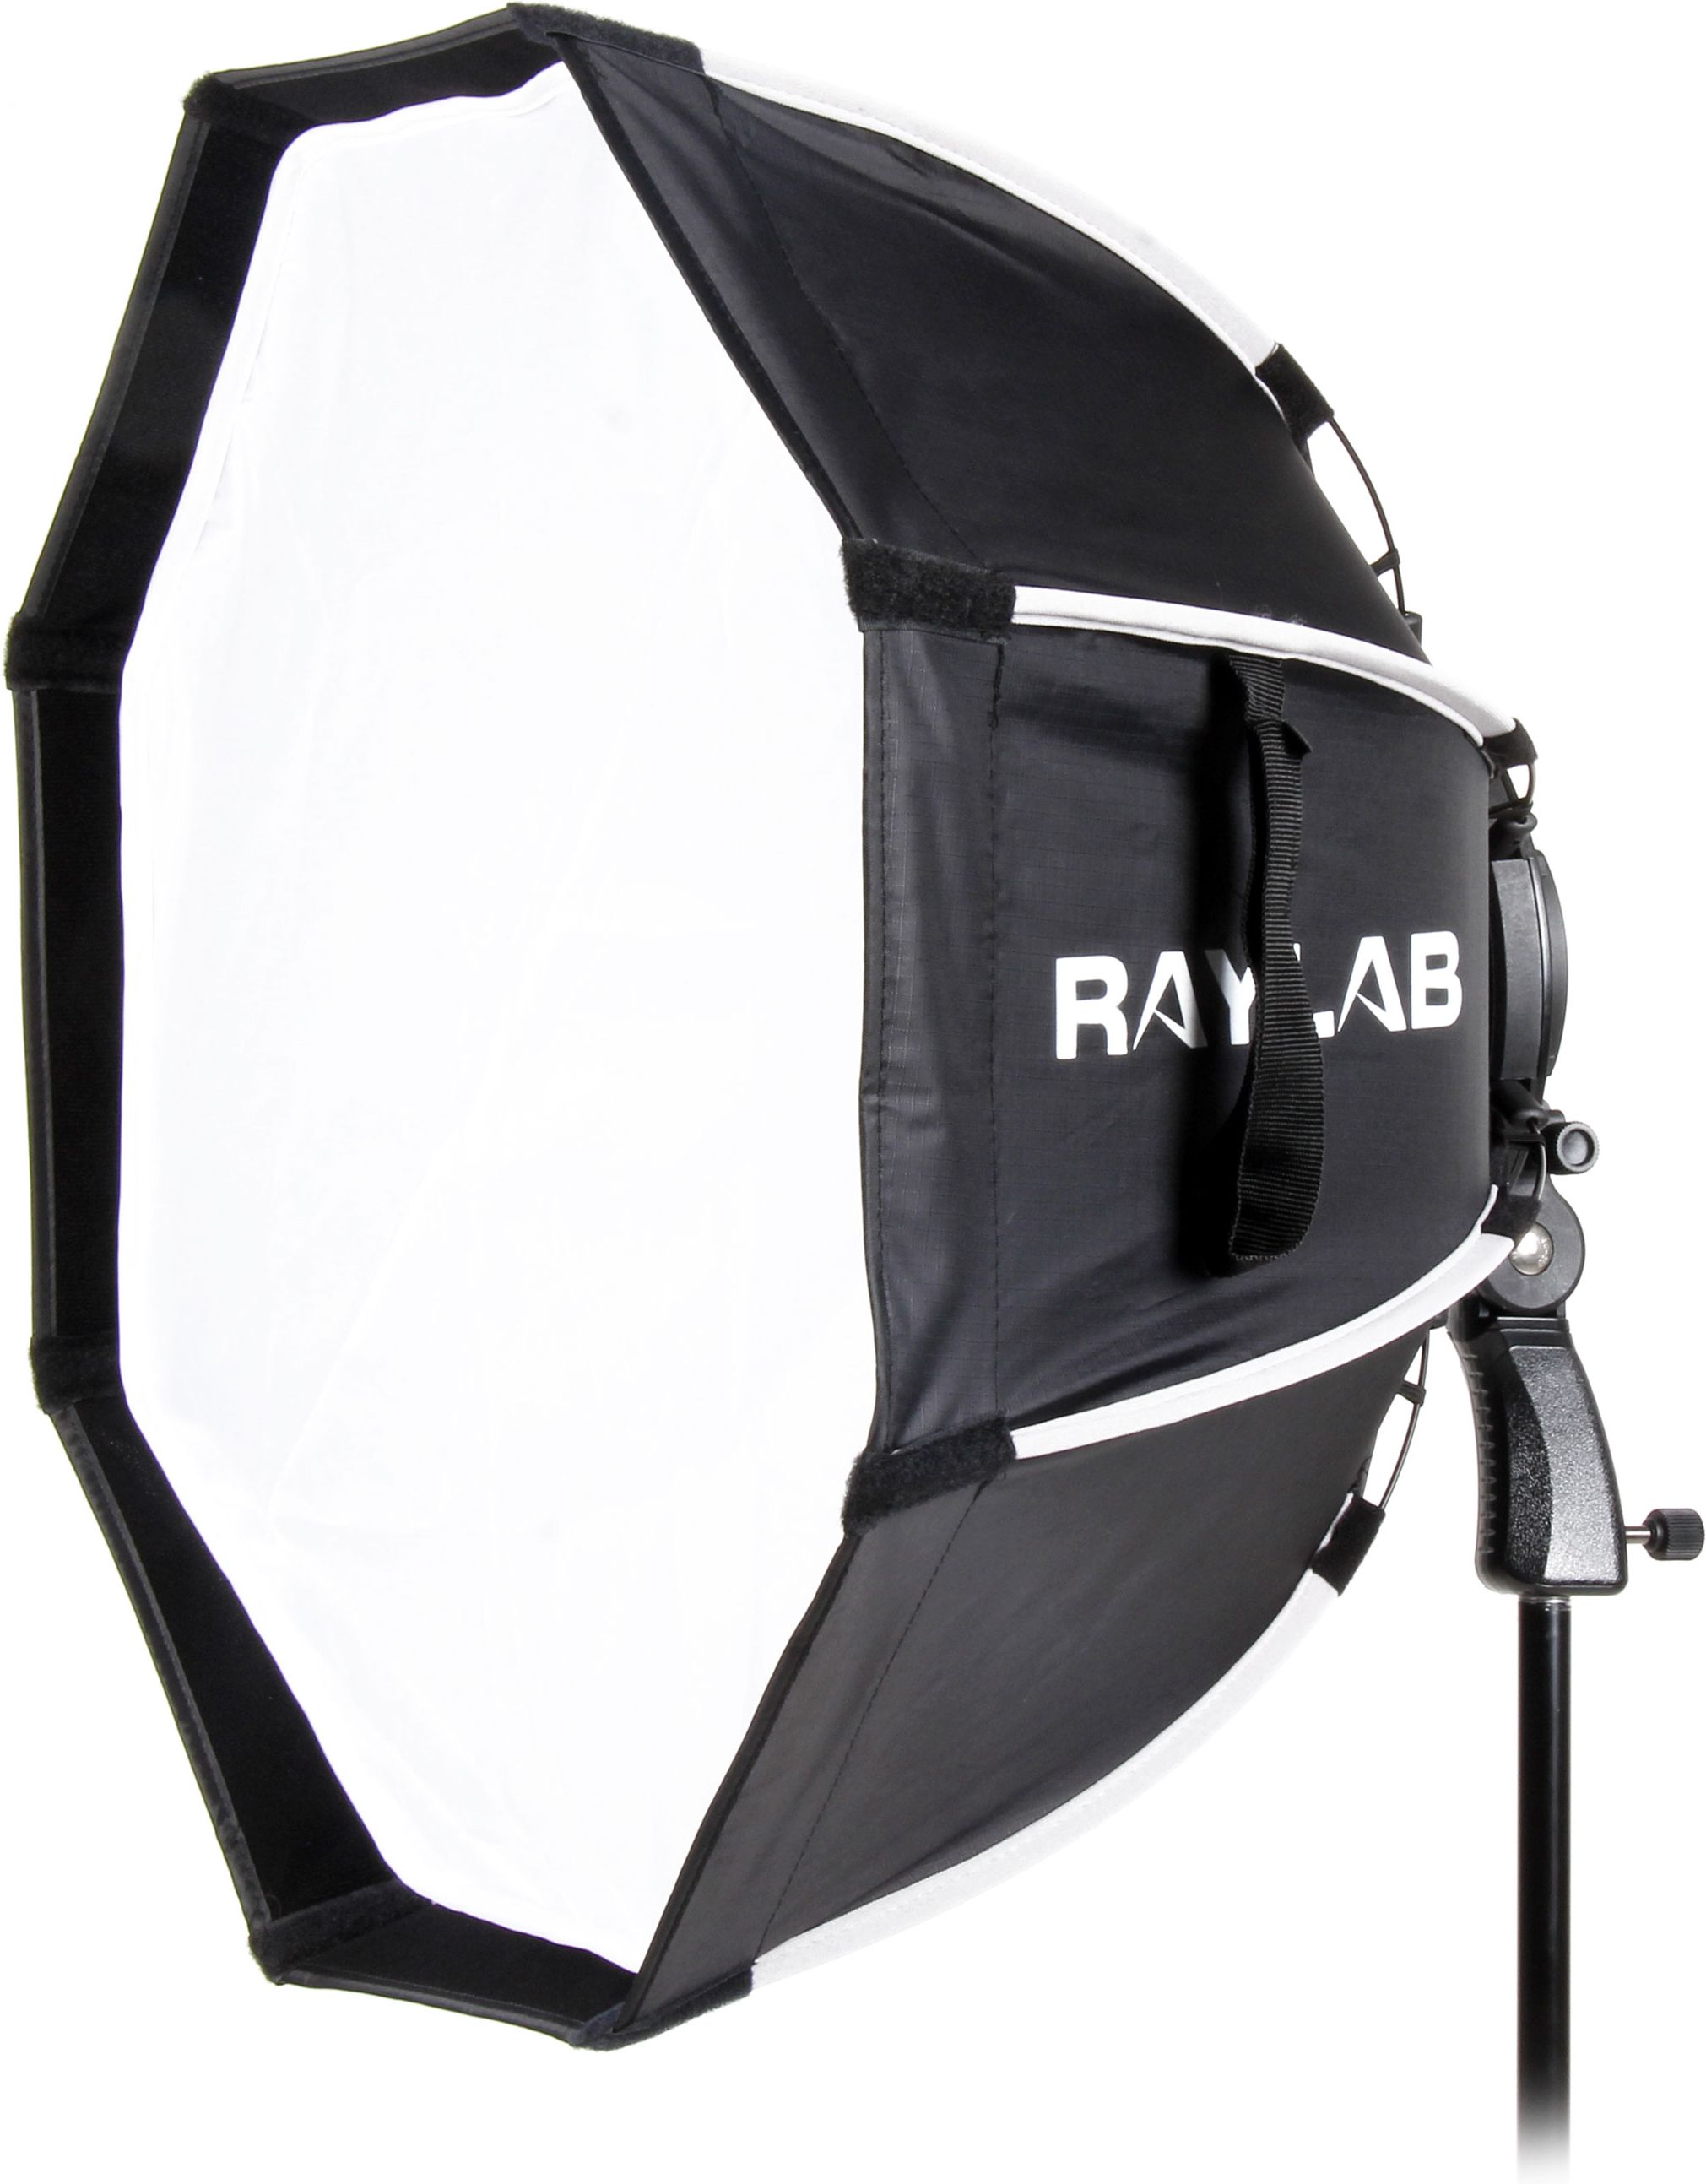      Raylab RL-SCG65   Ultra-mart